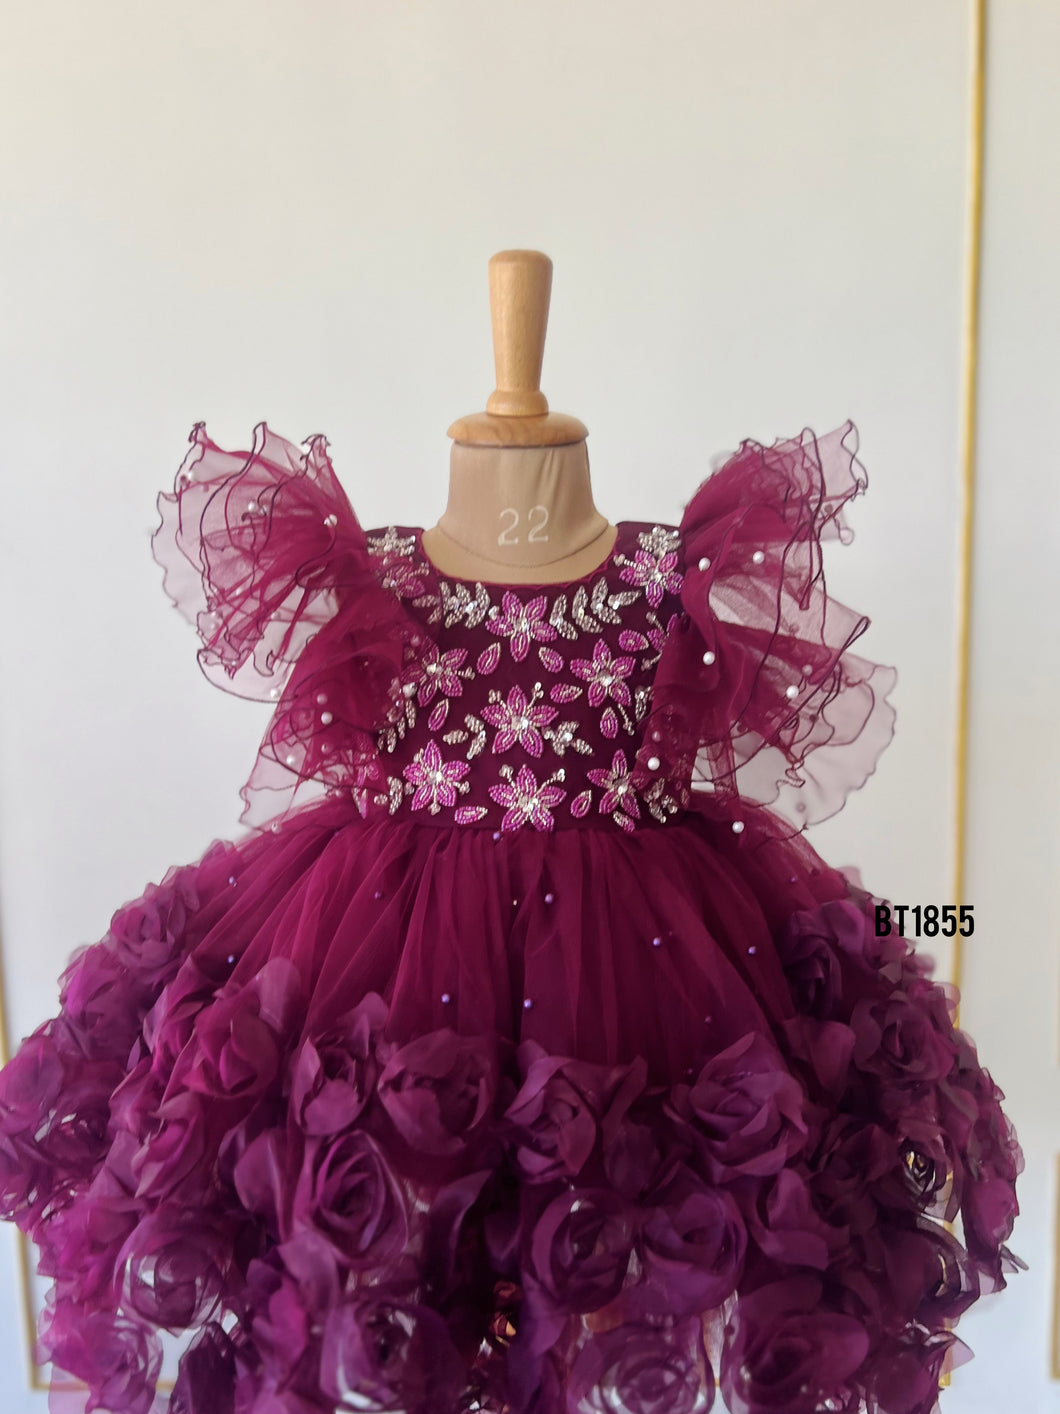 BT1855 Plum Princess Dress - Whirls of Whimsy in Deep Purple!